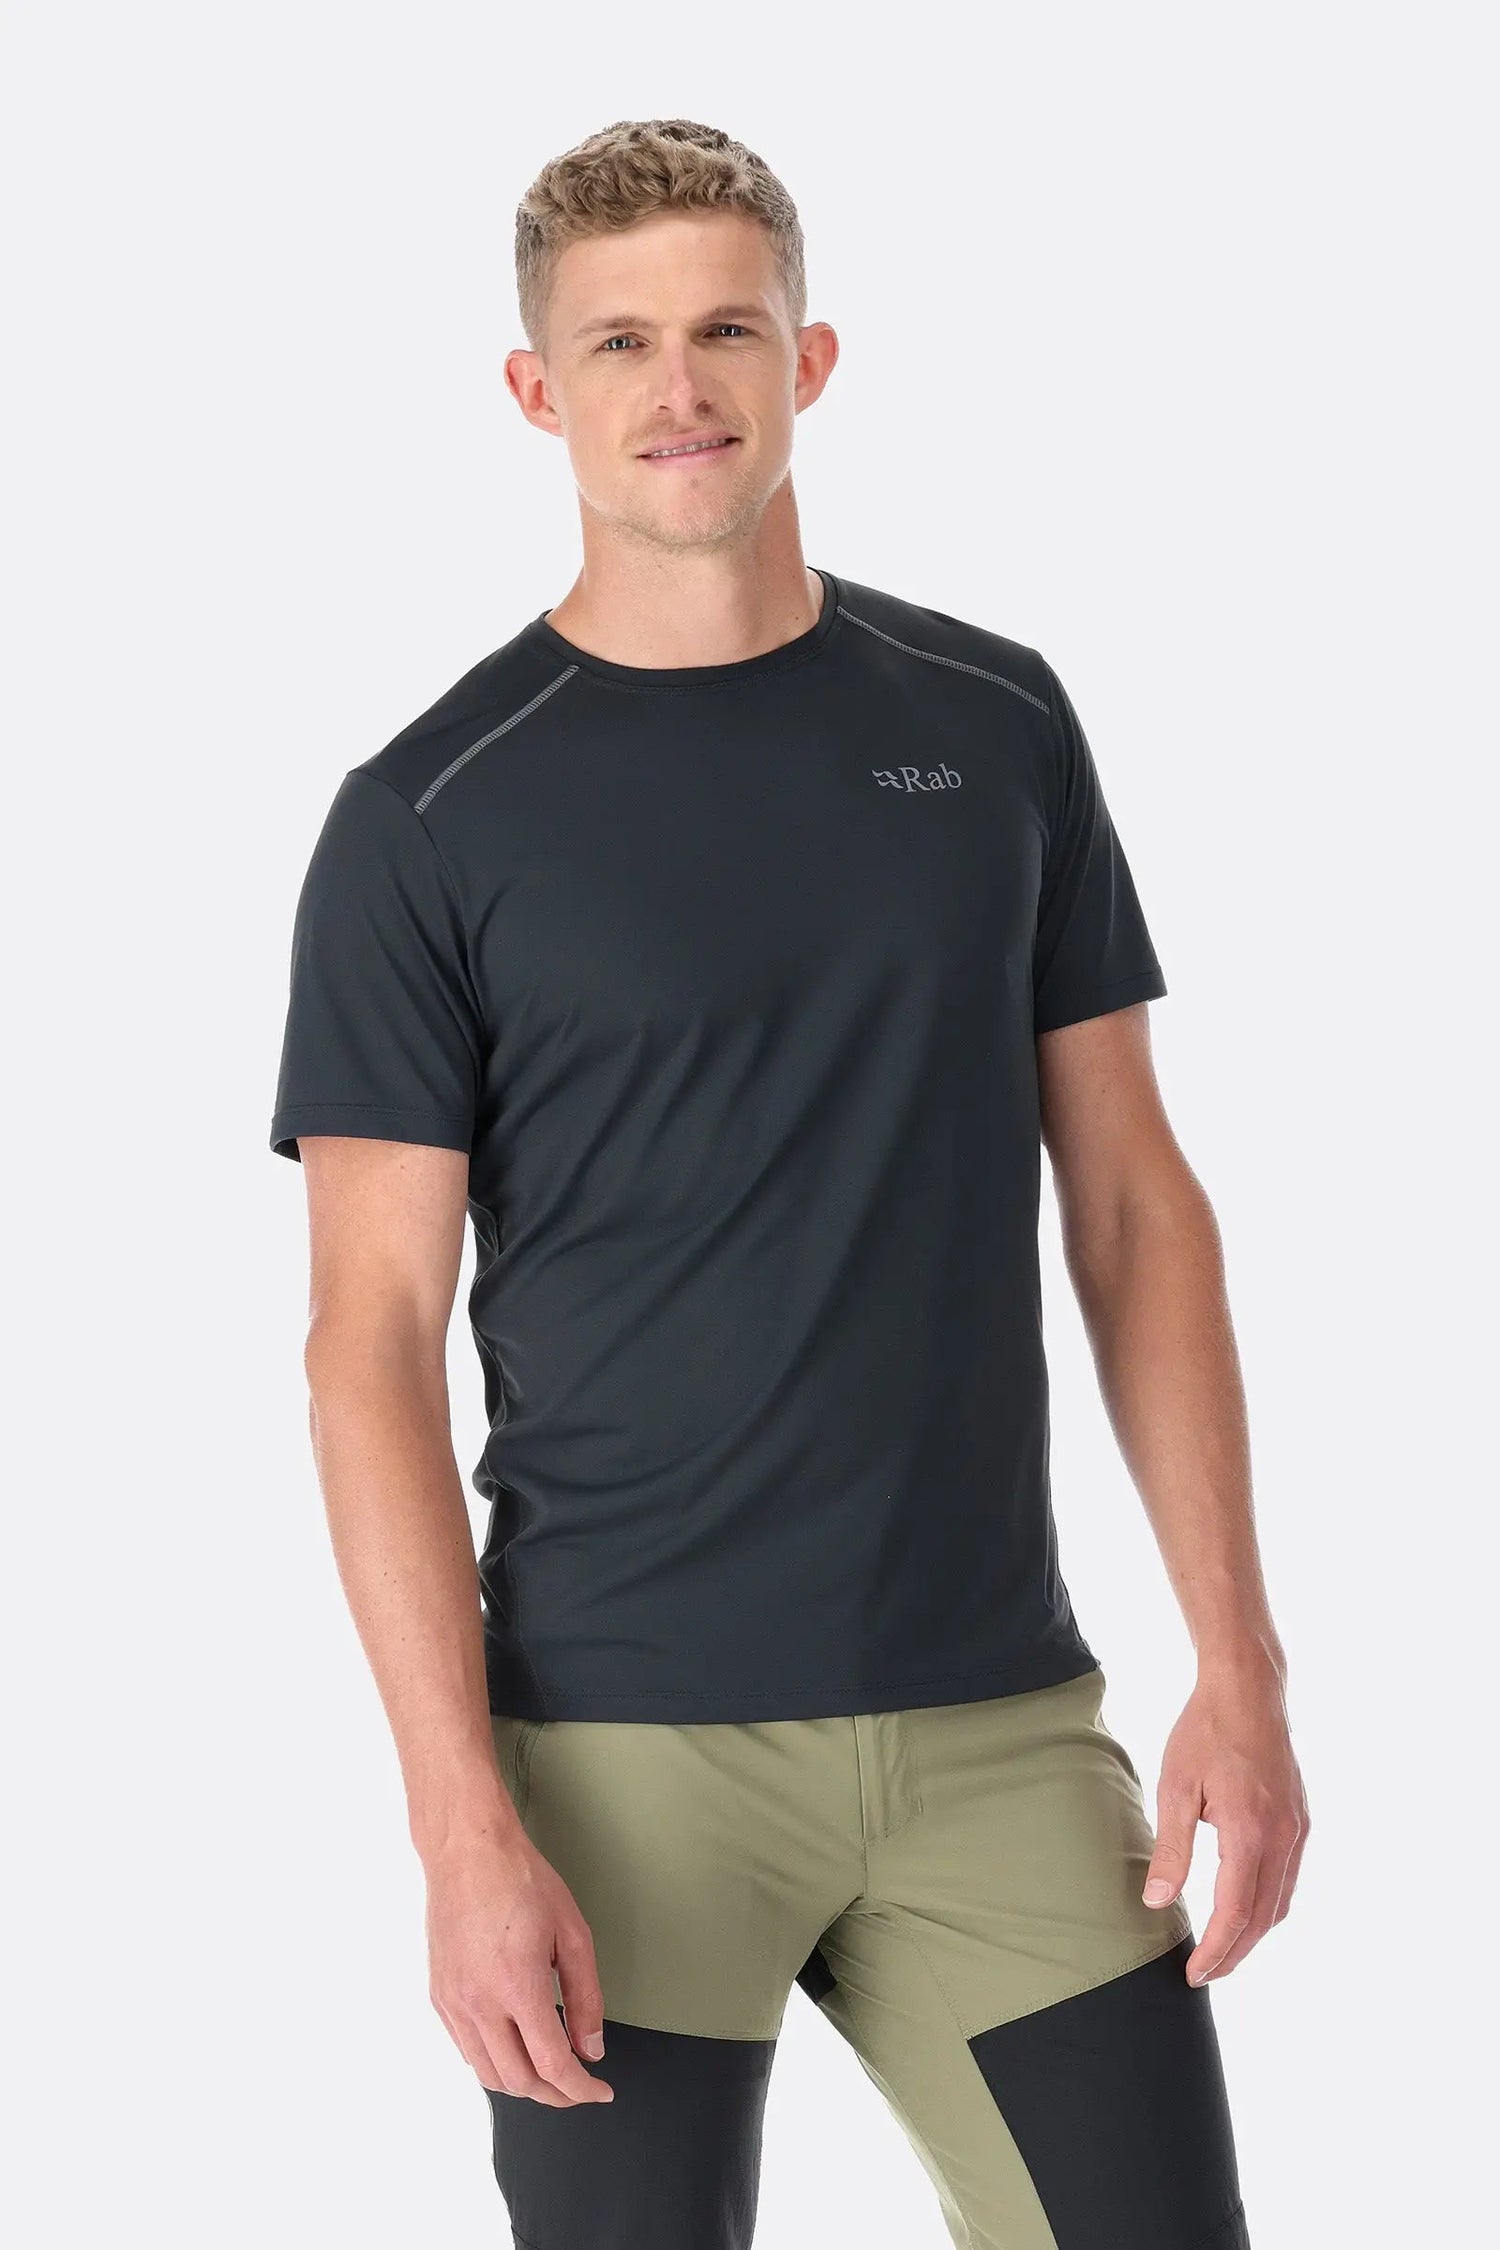 Rab M's Force T-shirt - Recycled polyester & polyester Beluga Shirt